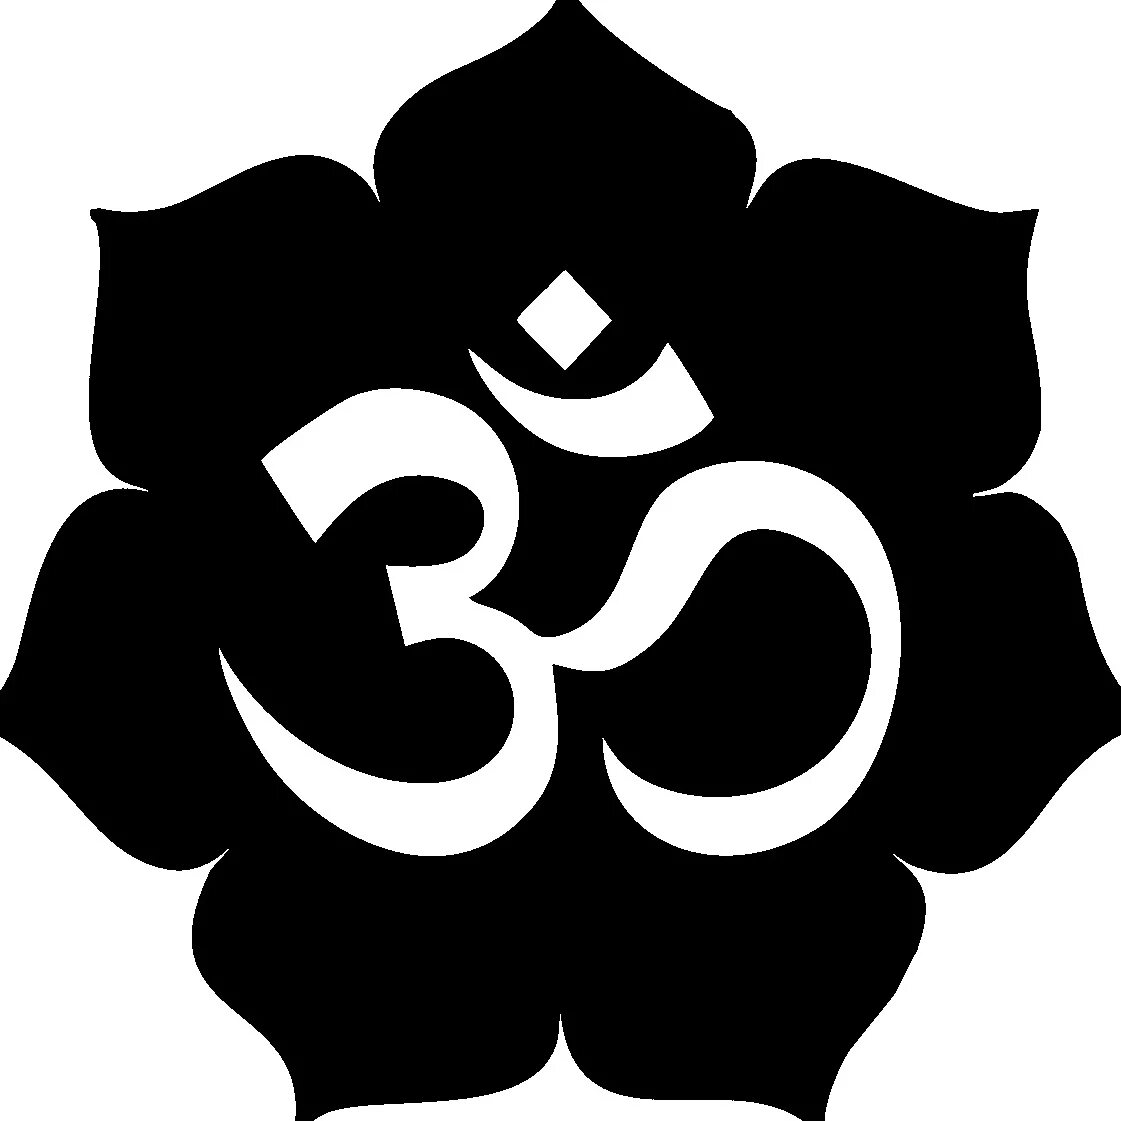 Знак удачи в индии. Знак ом в индуизме. Символ ом Аум. Индуистский символ Аум. Индуизм Aum.